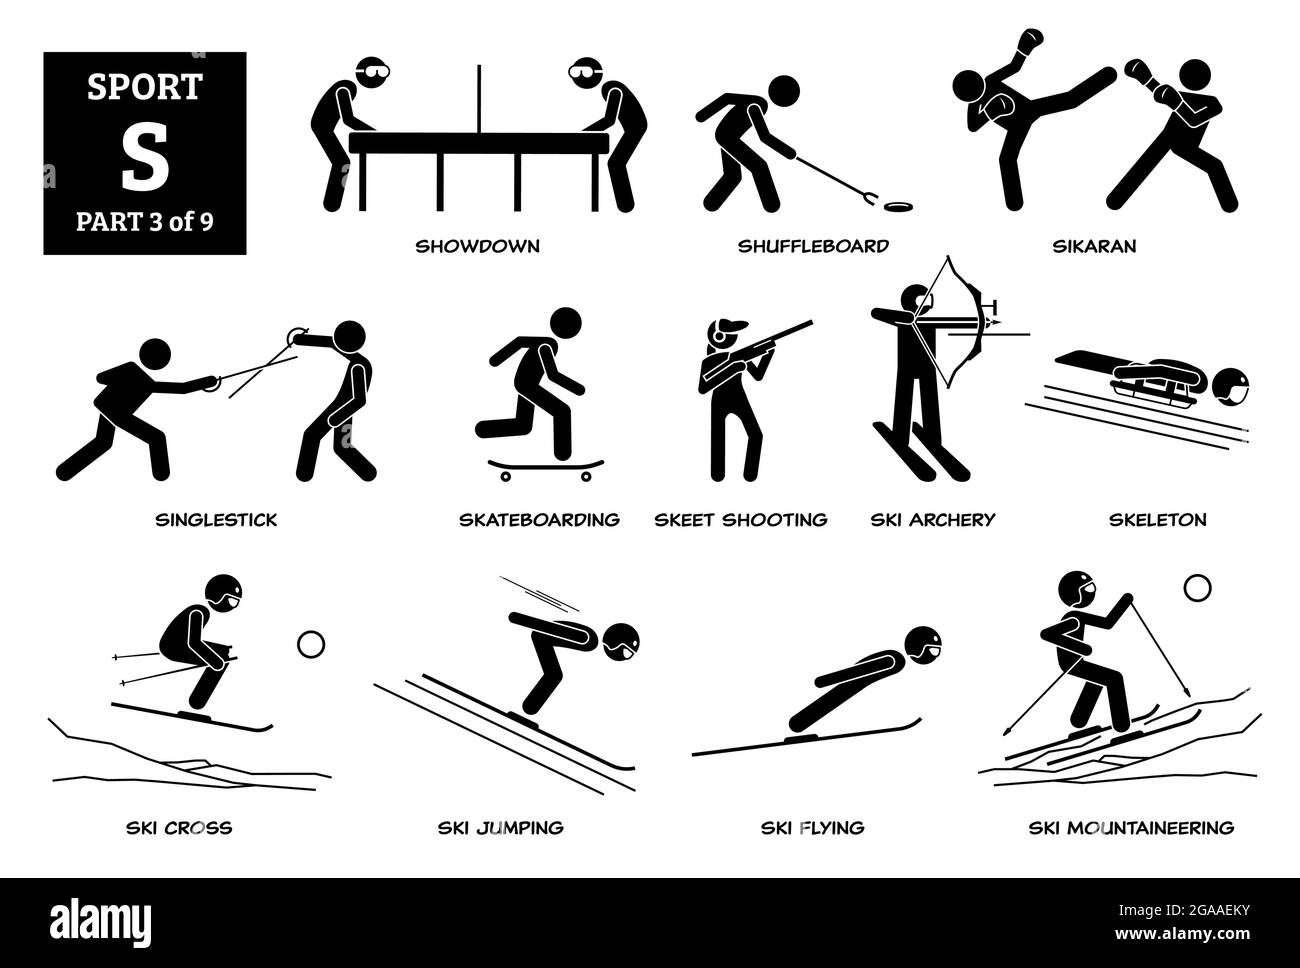 Sport games alphabet S vector icons pictogram. Showdown, shuffleboard, sikaran, singlestick, skateboarding, skeet shooting, ski archery, skeleton, ski Stock Vector